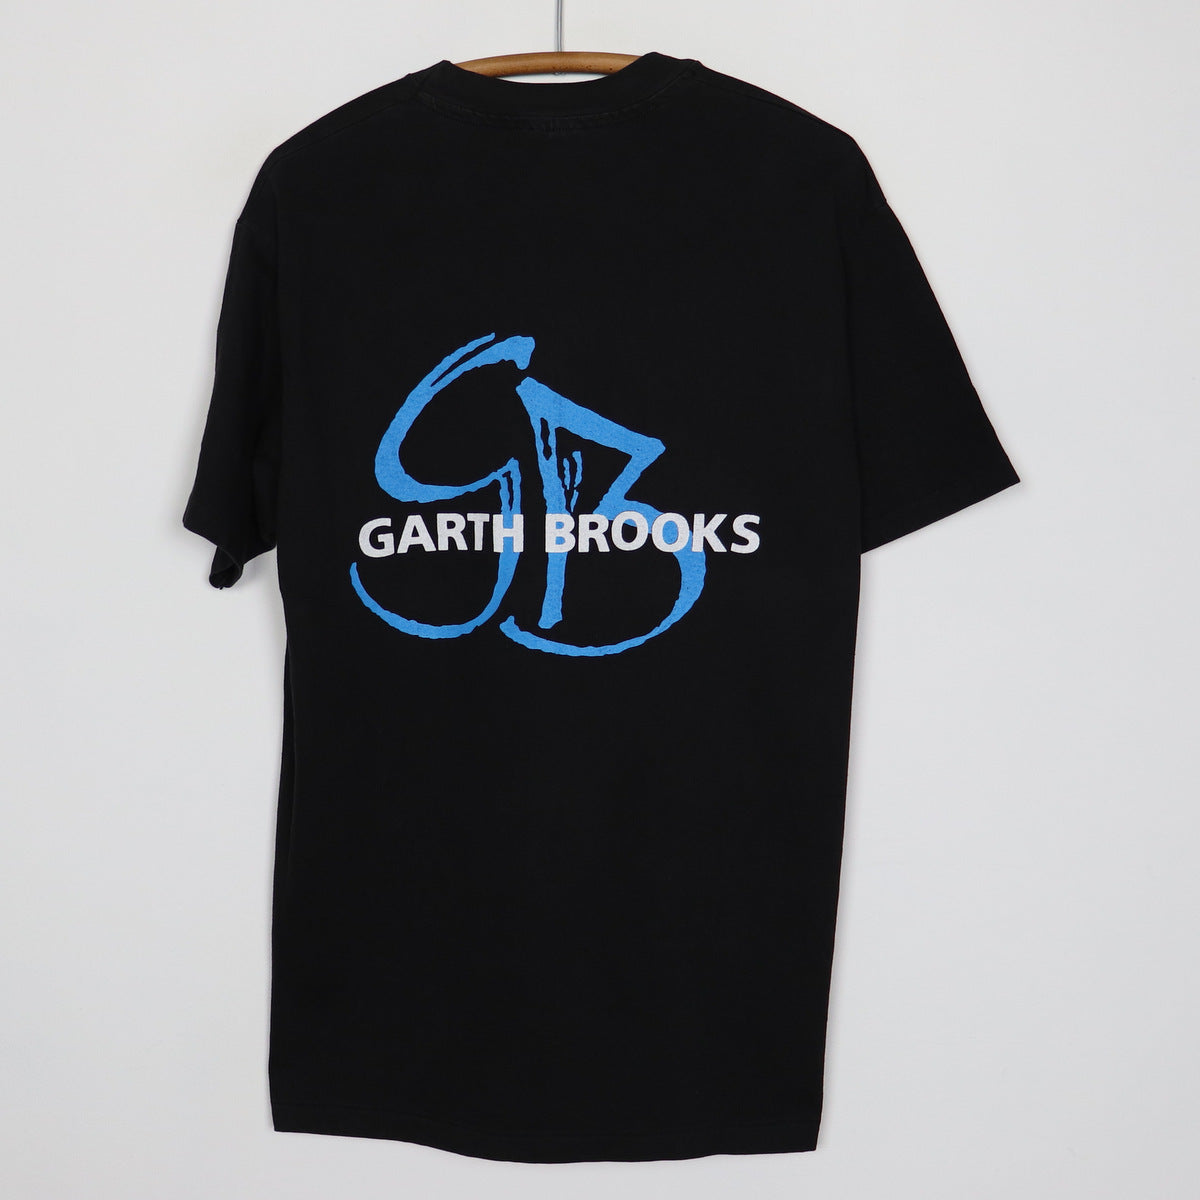 1992 Garth Brooks Shirt